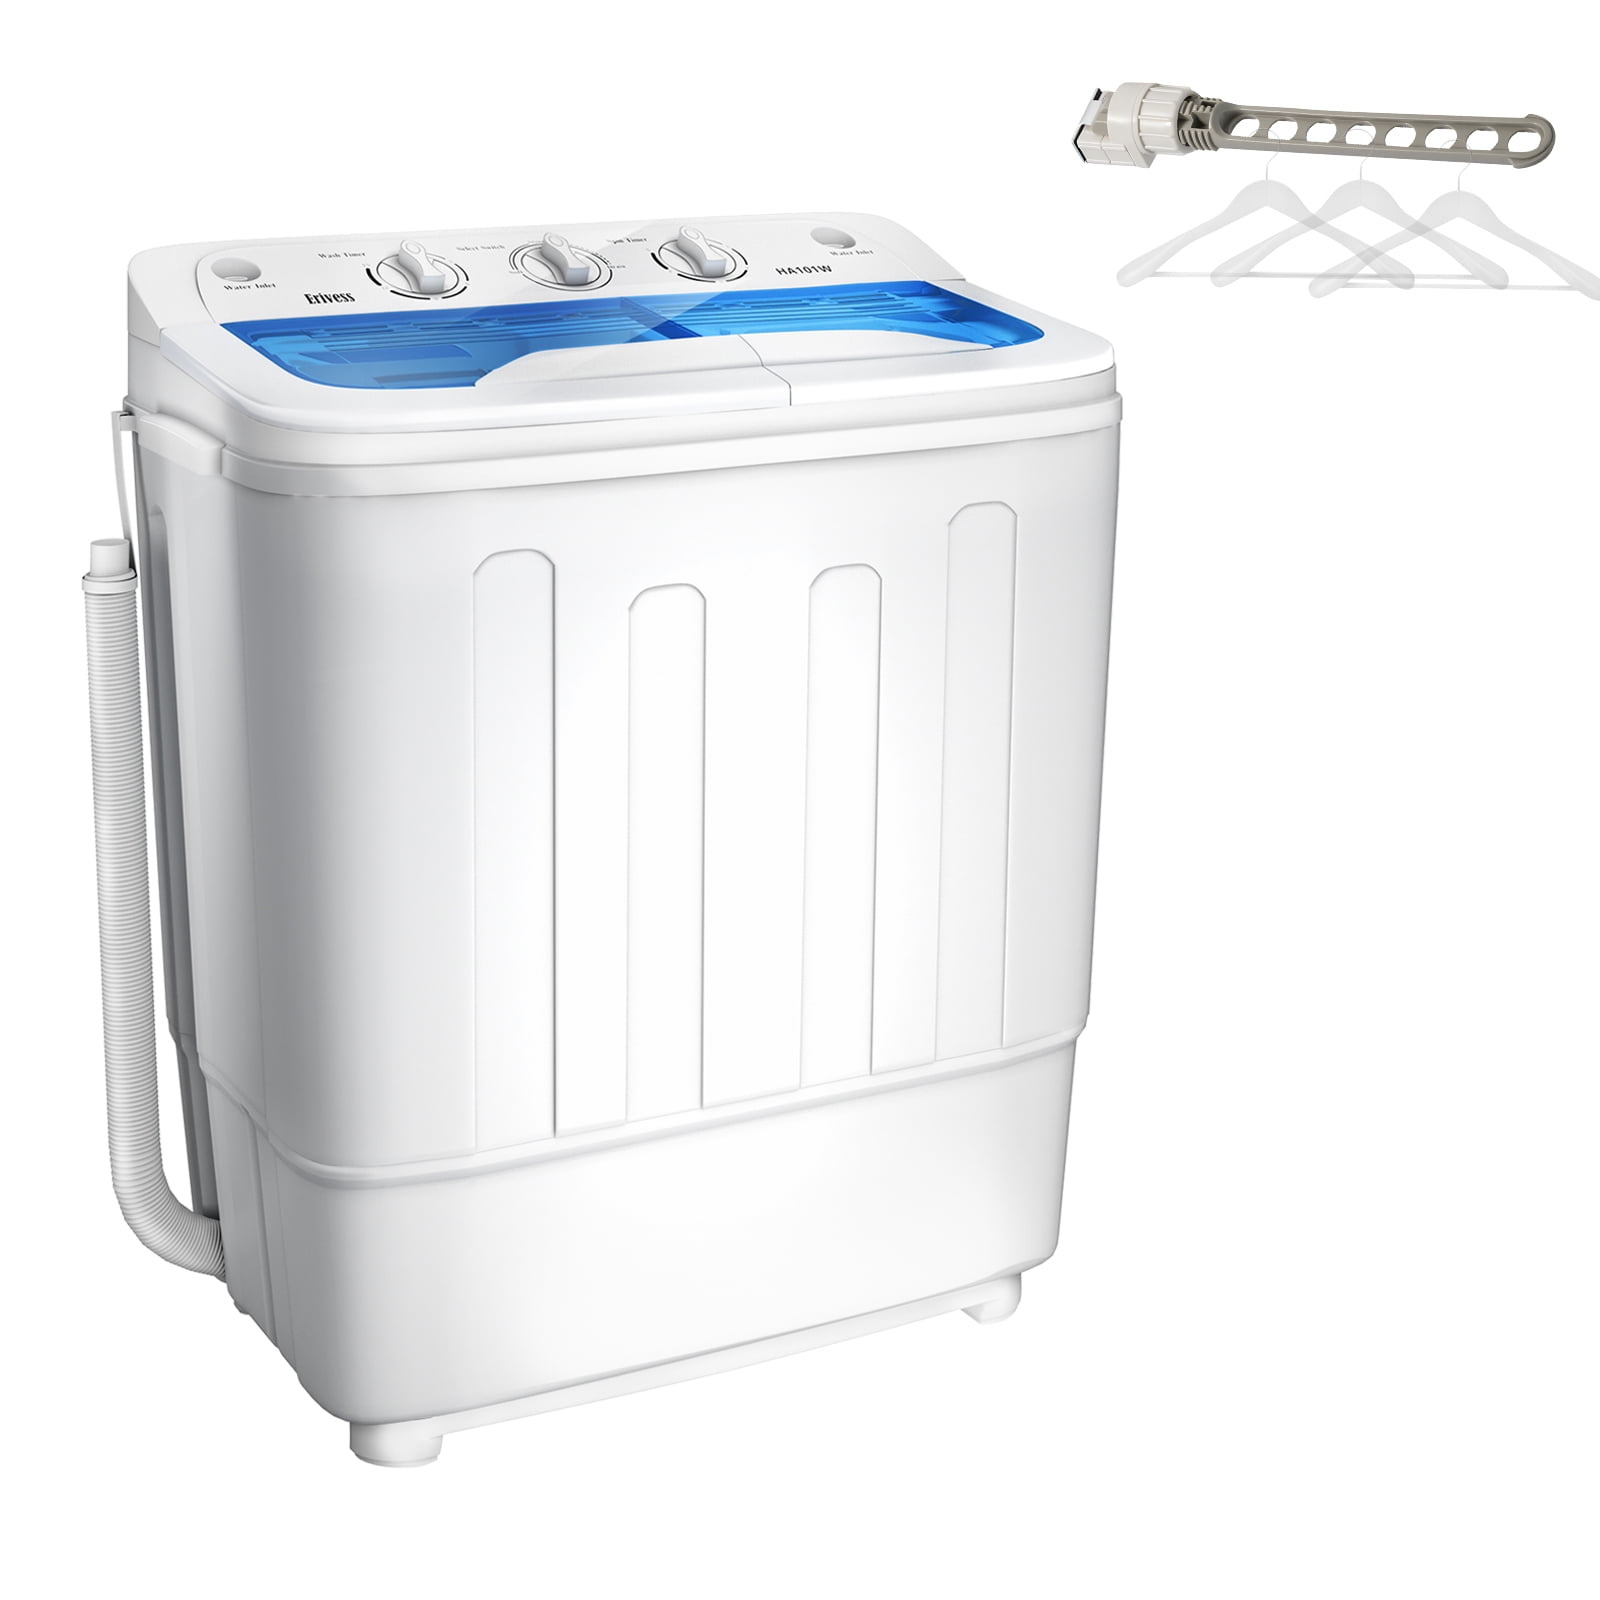 Comfee E08 6/7/8KG Automatic Washing Machine, Buy Comfee Washing Machine